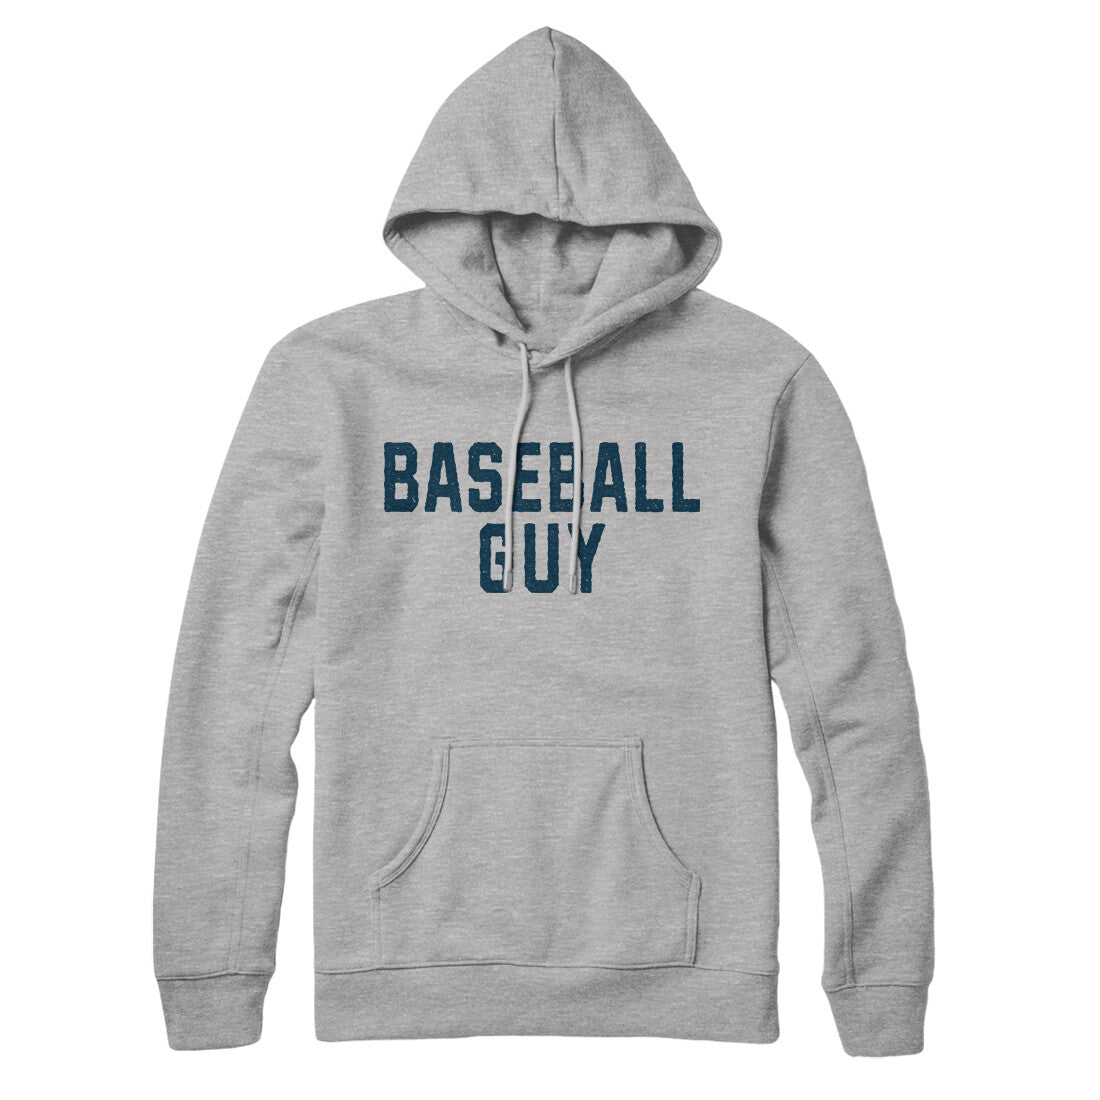 Baseball Guy in Heather Grey Color